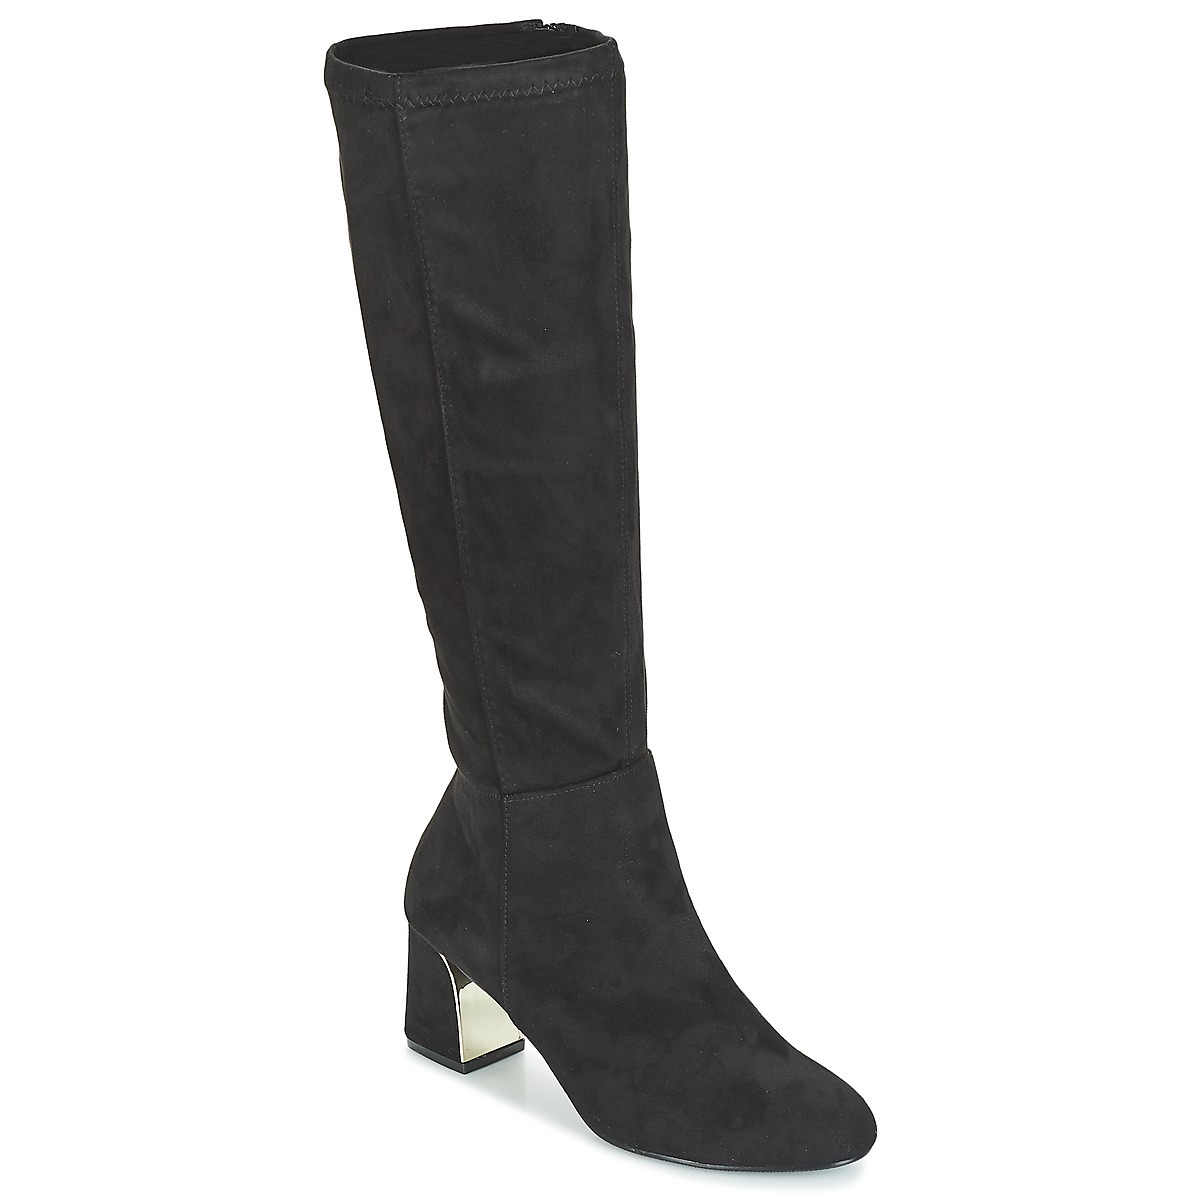 Boots in Black - Spartoo Woman - Spartoo GOOFASH